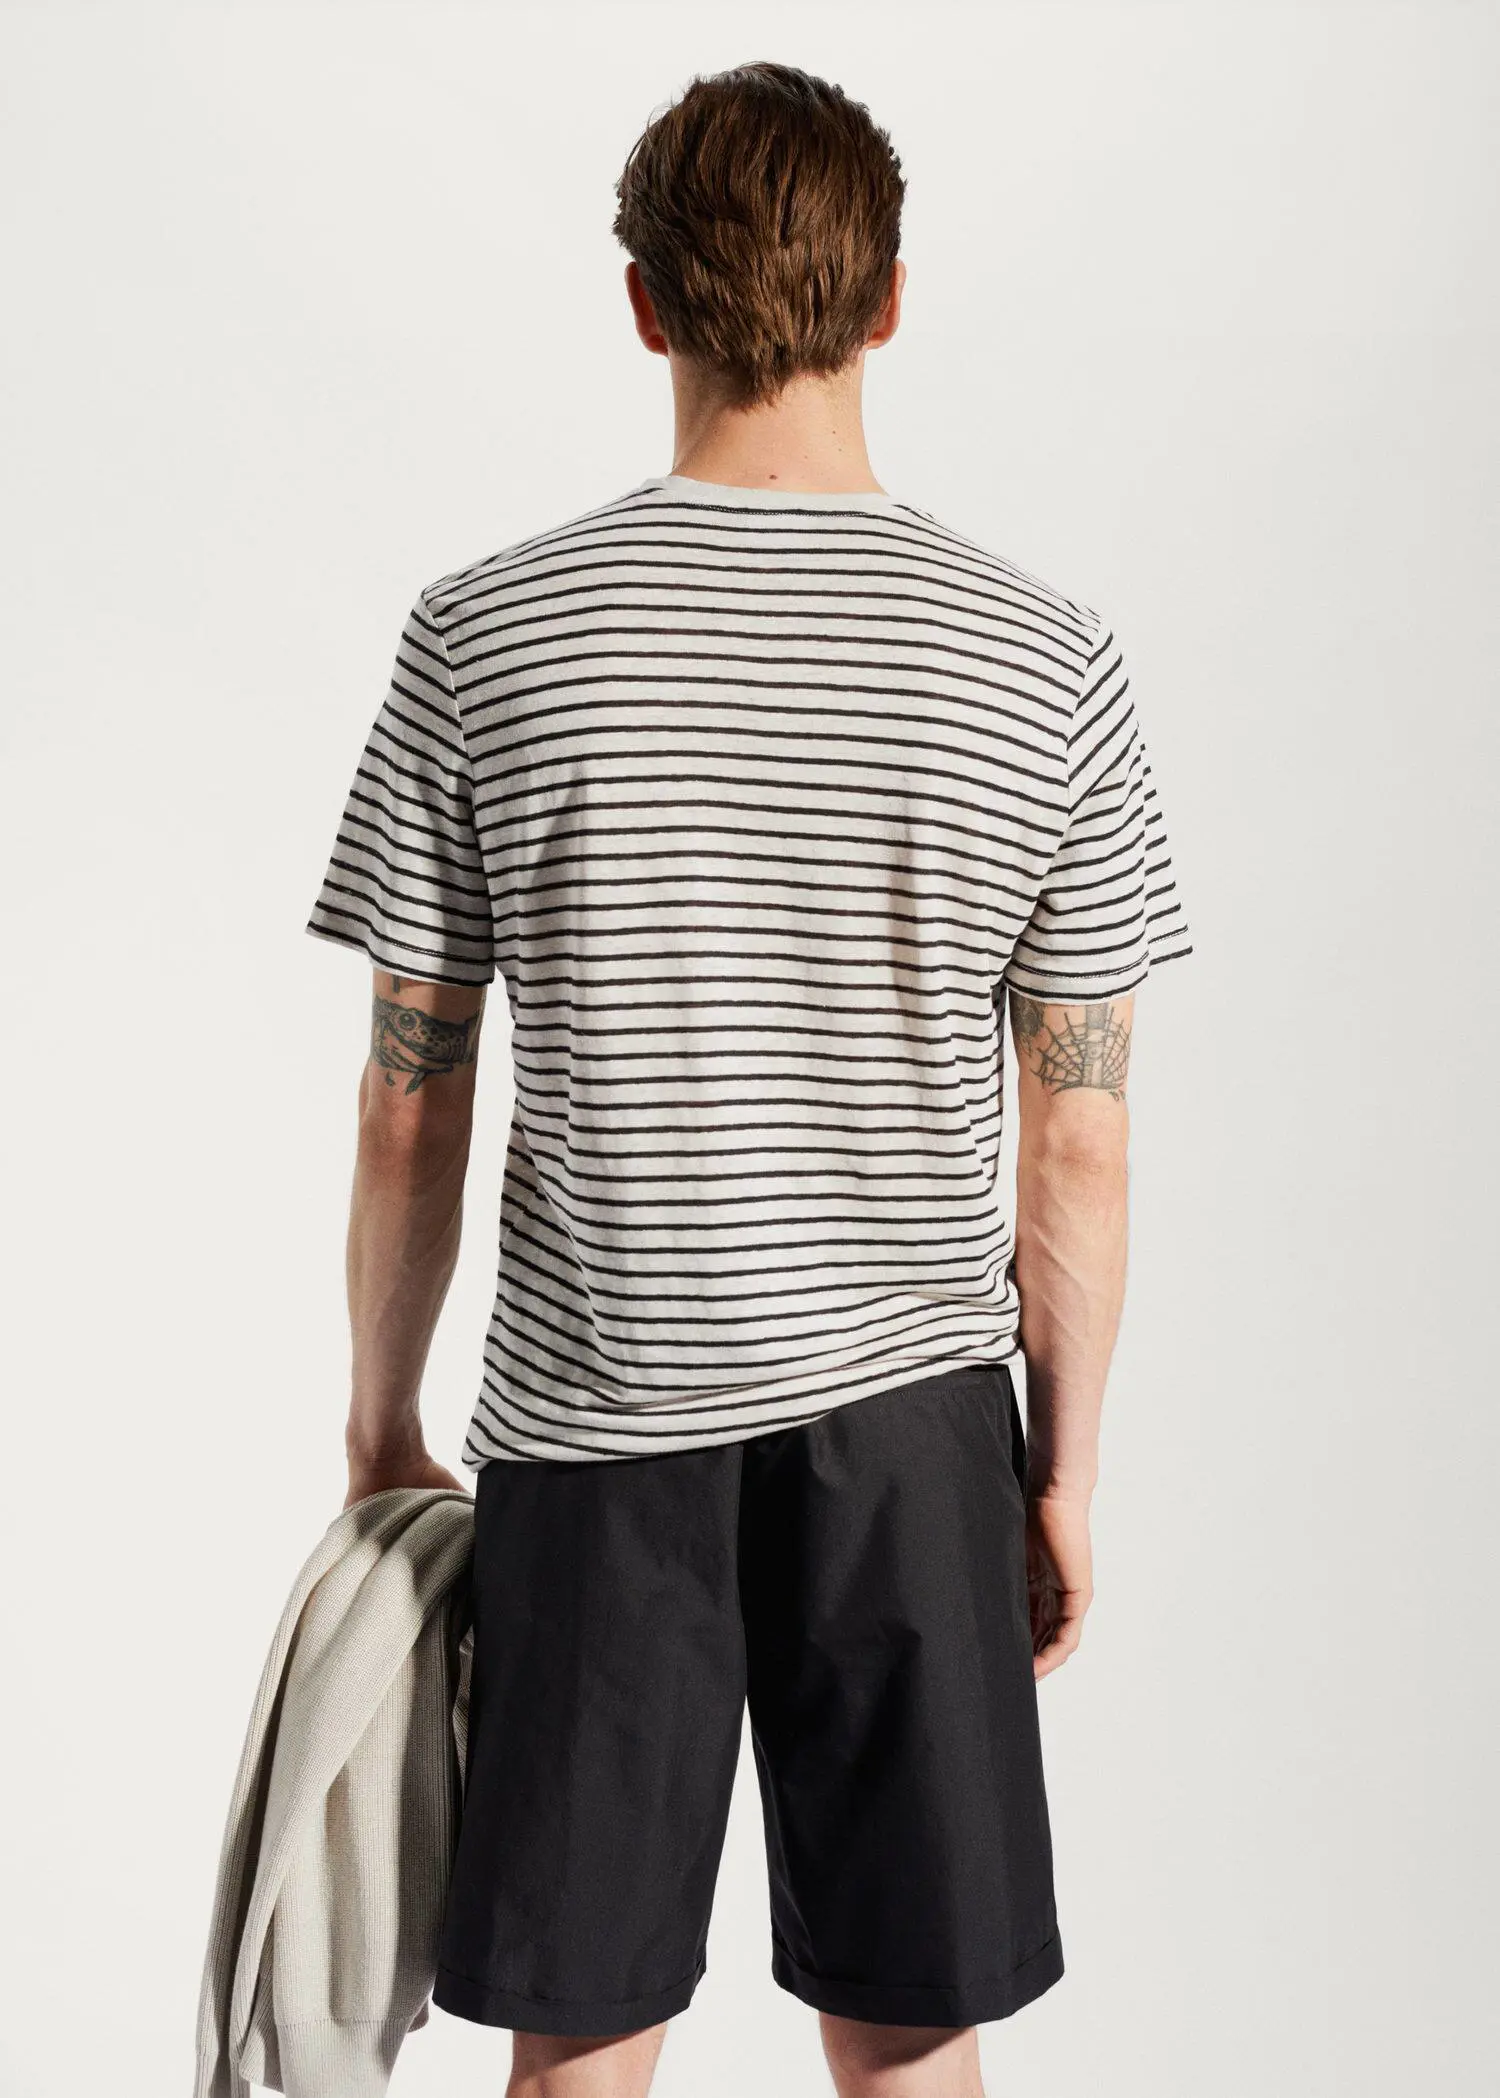 Mango 100% linen striped t-shirt. a man in a striped shirt is holding a surfboard. 